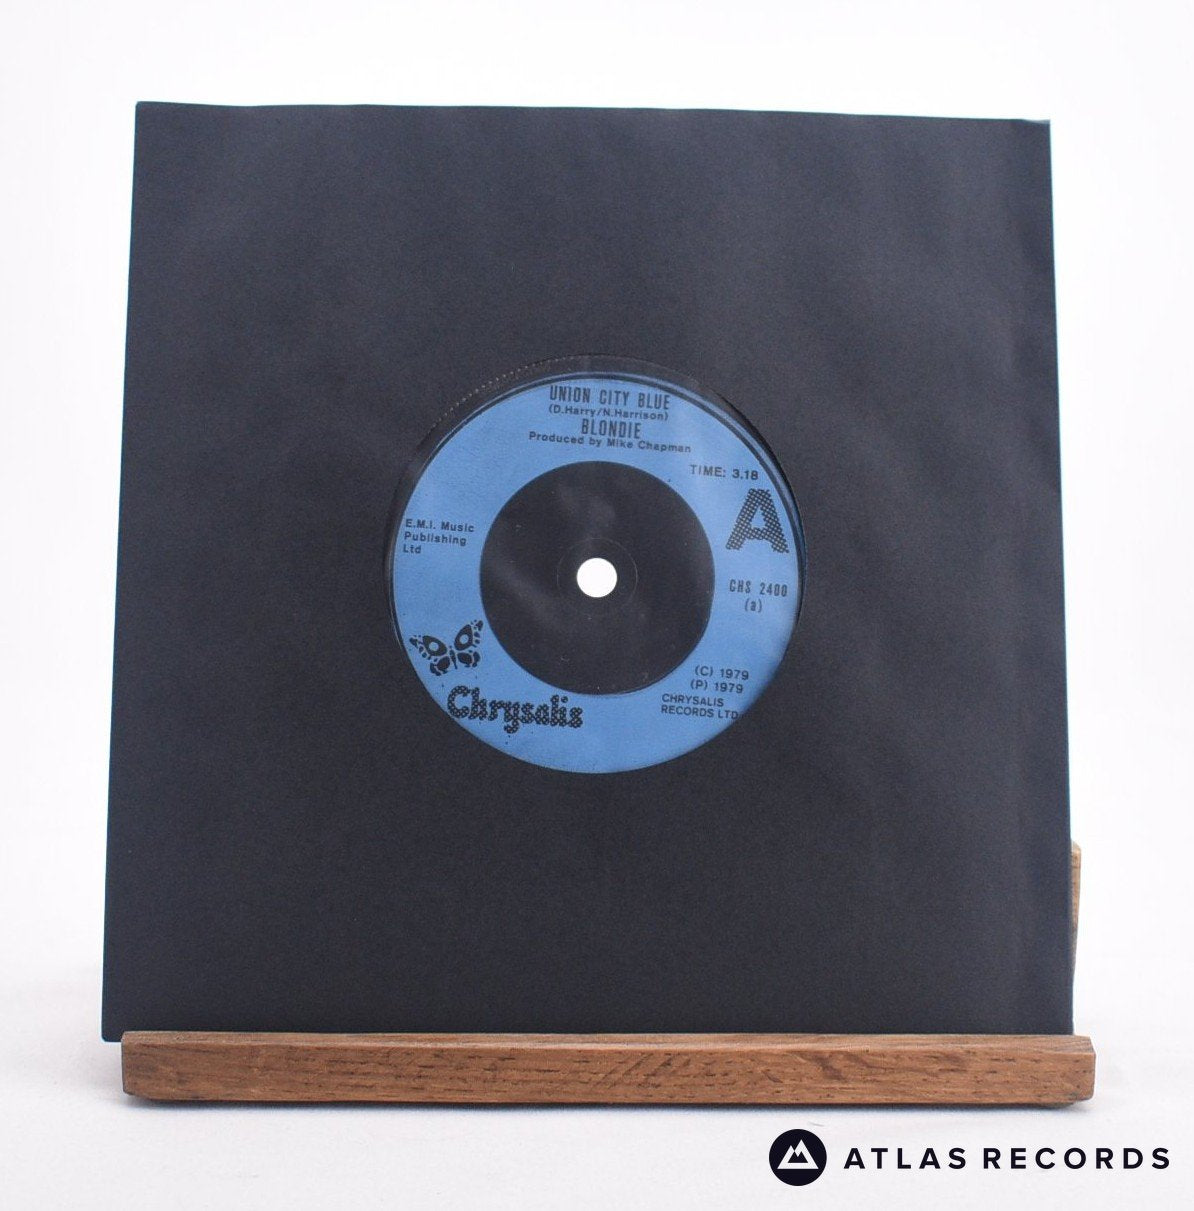 Blondie Union City Blue 7" Vinyl Record - In Sleeve